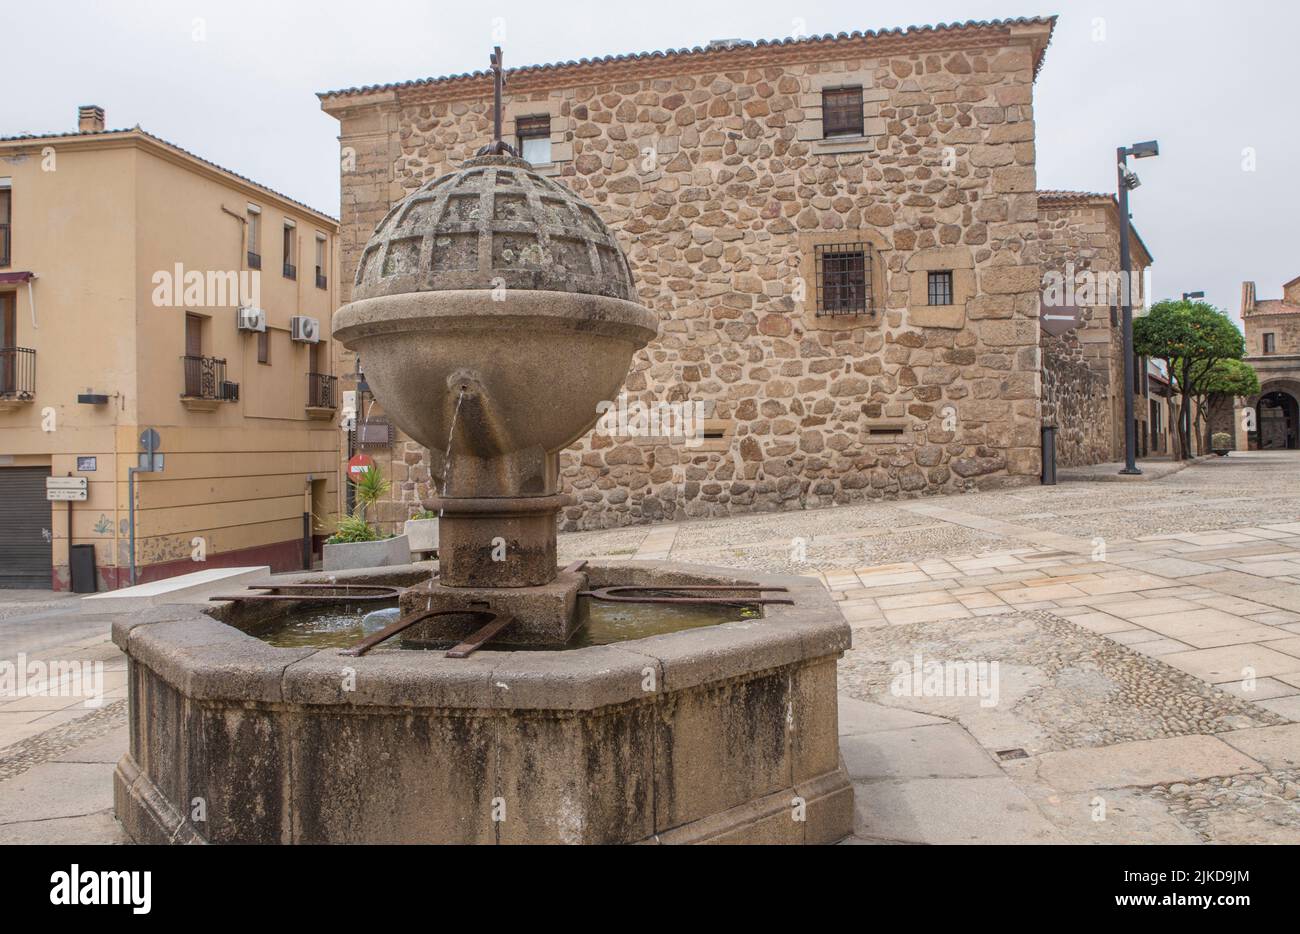 Plaza de San Nicolás, calle medieval en el casco antiguo de Plasencia, Cáceres, Extremadura, España. Foto de stock